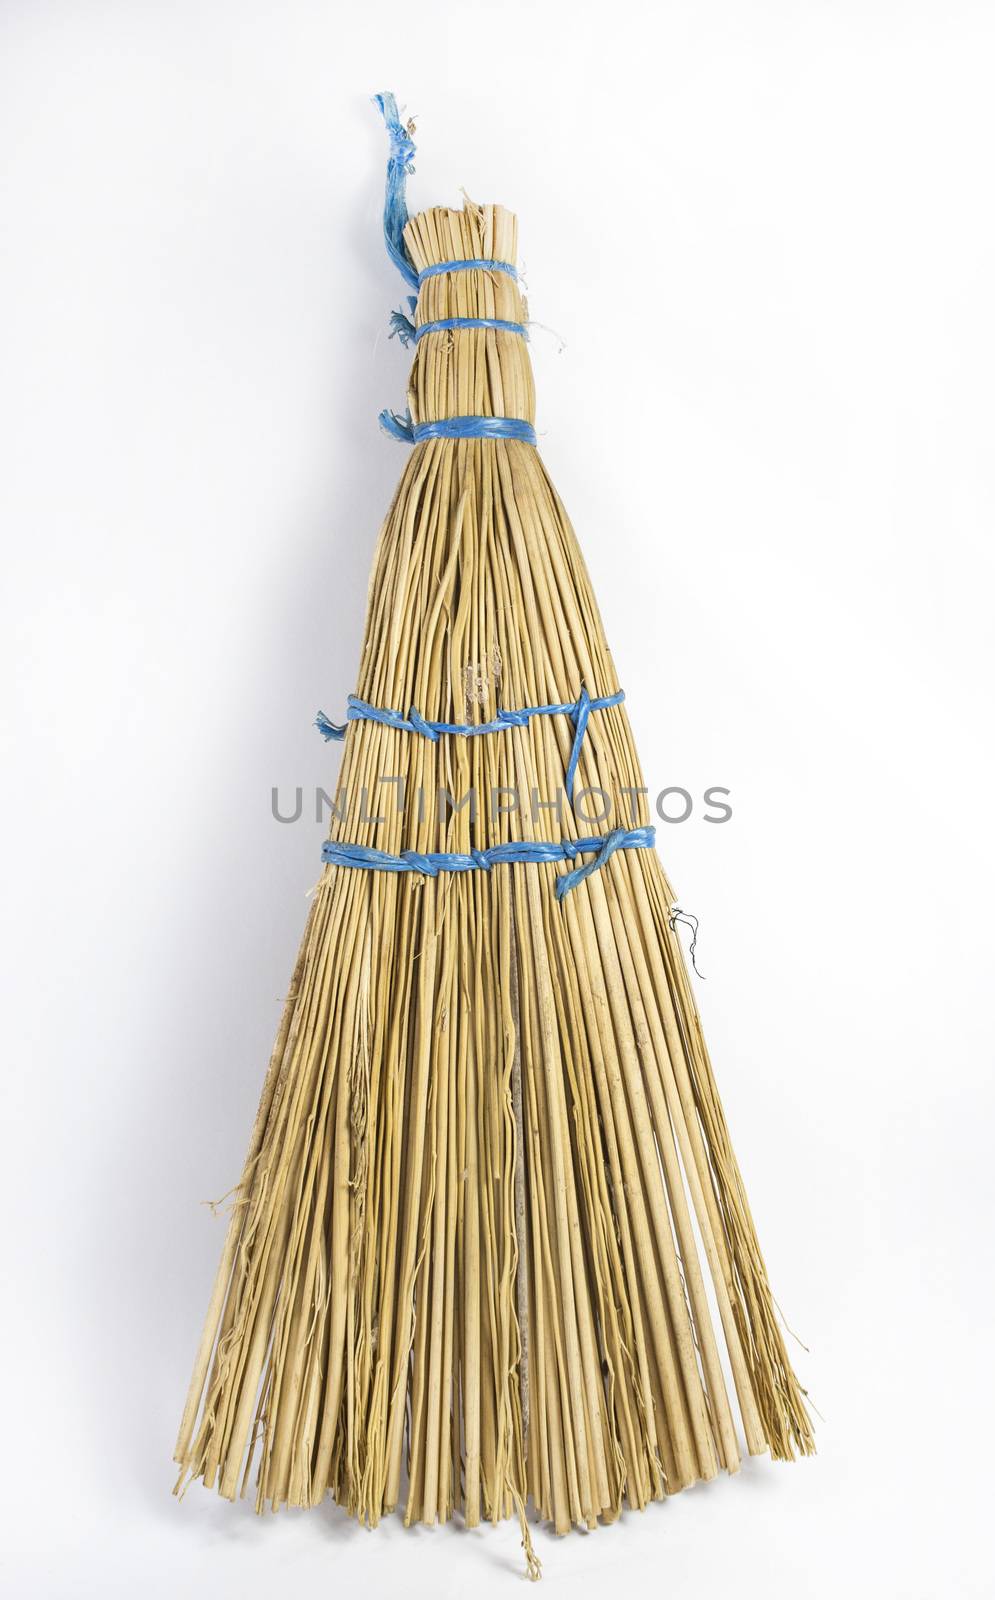 Household broom by designsstock